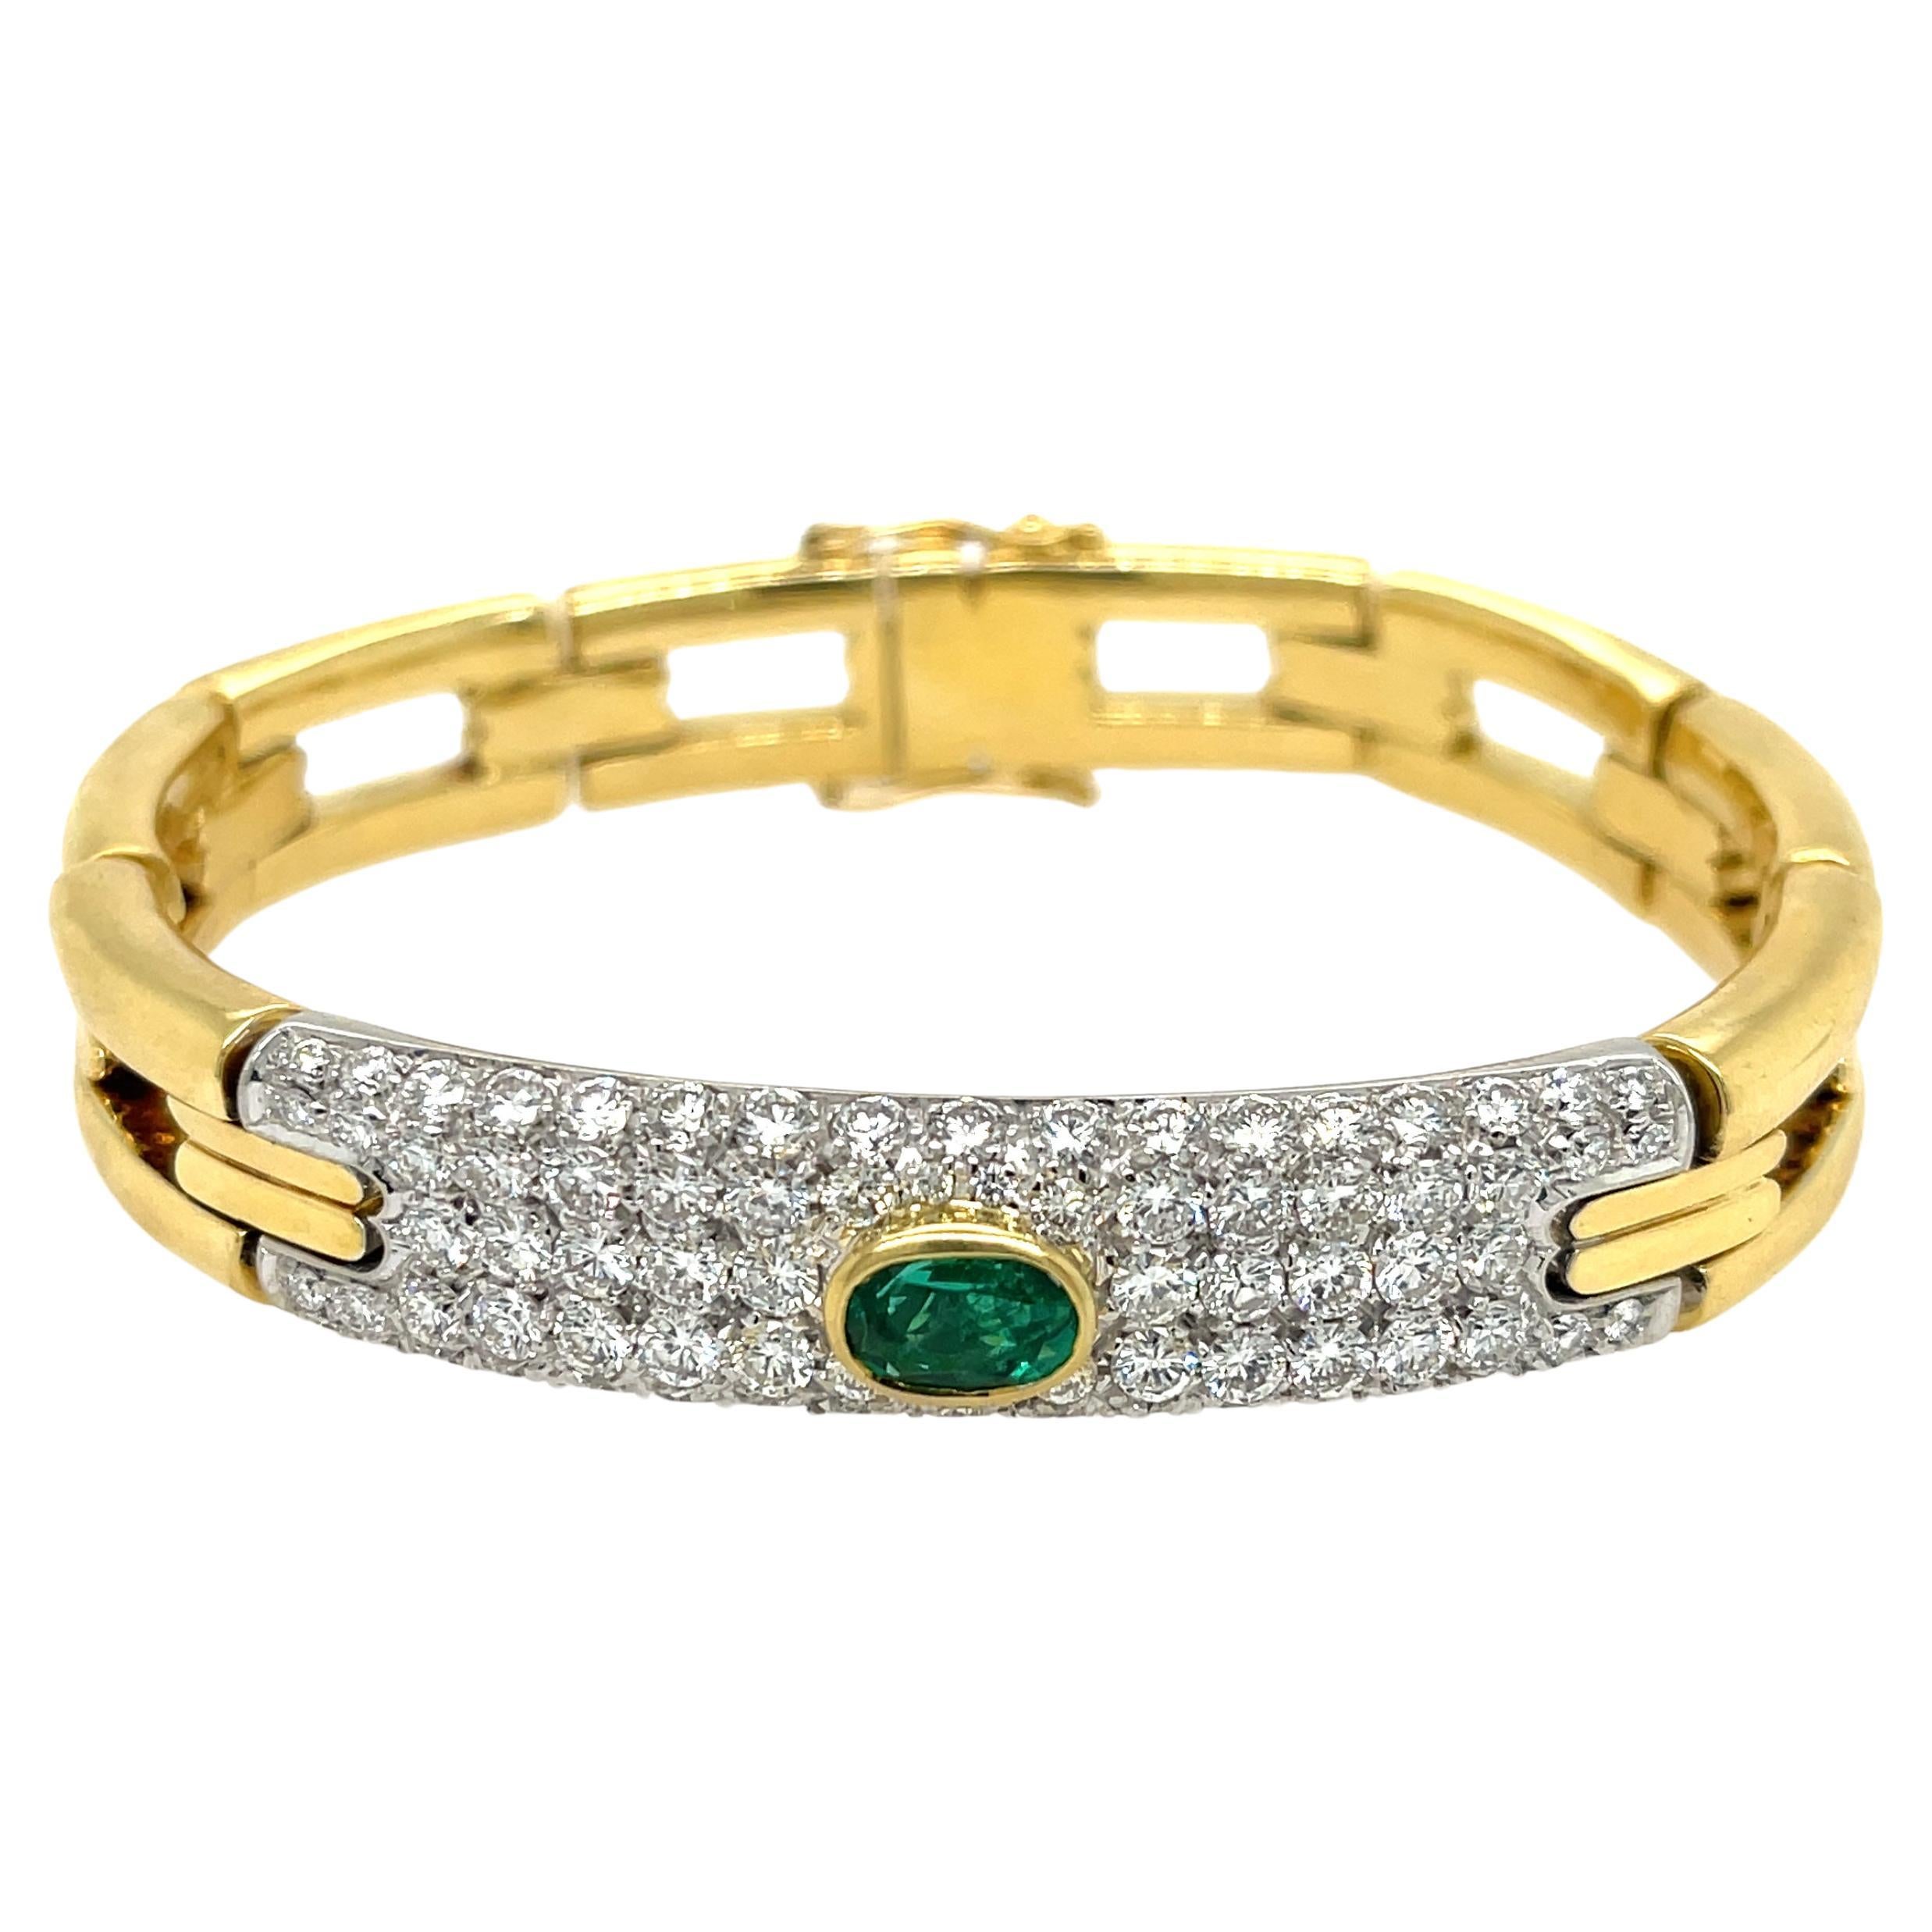 Estate Damiani Emerald and Diamond Bracelet in 18k Yellow Gold